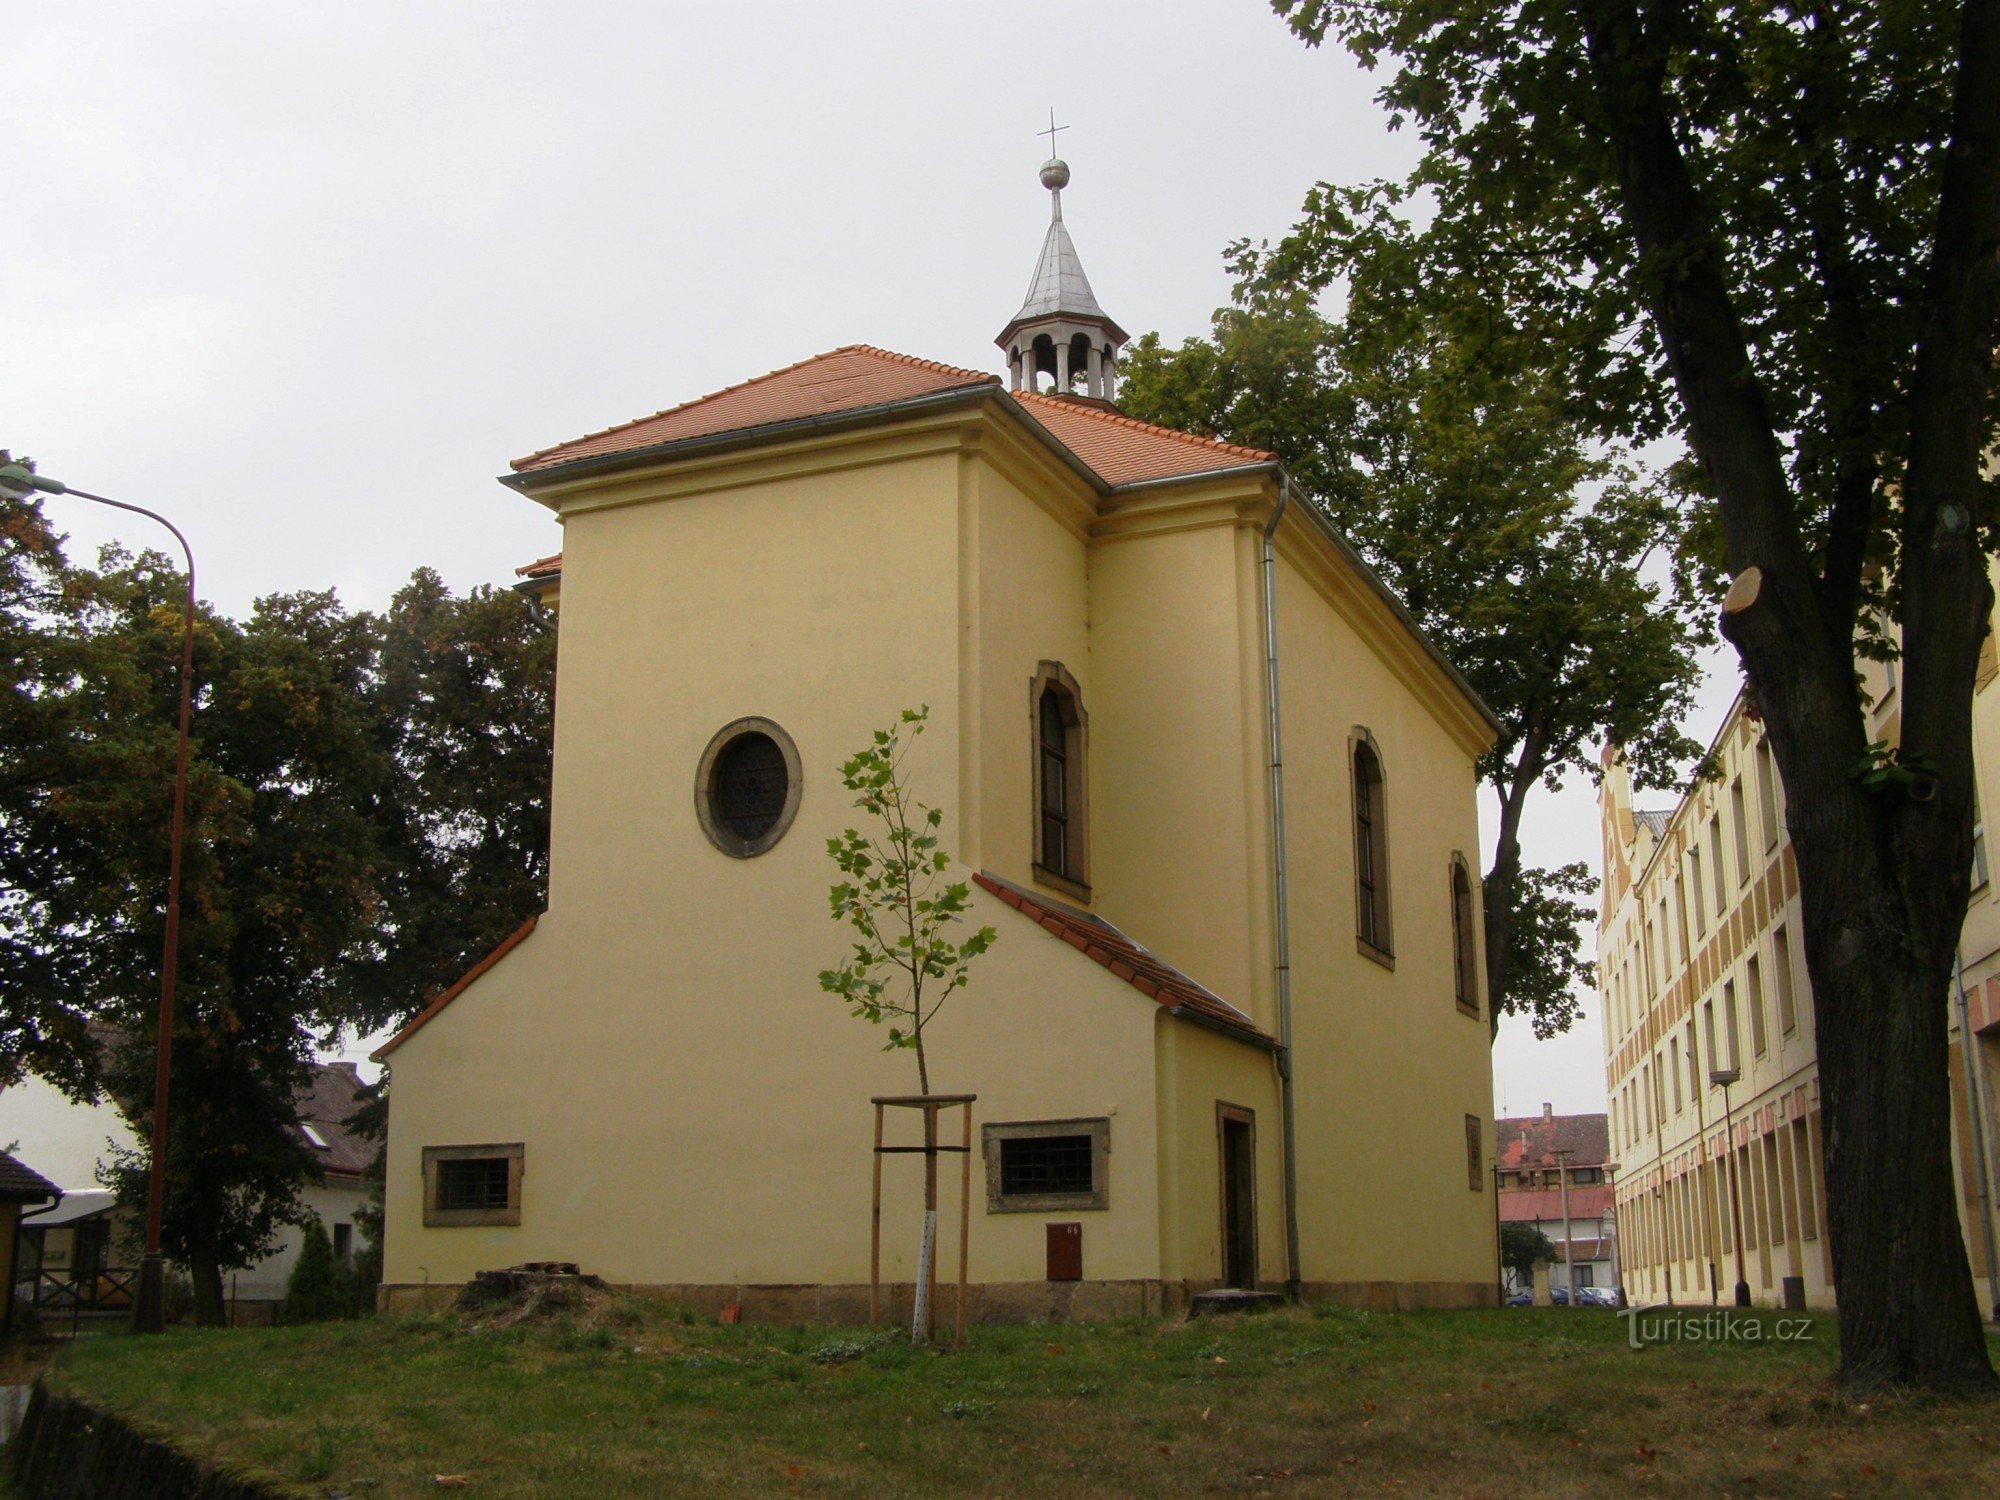 Skrivany - igreja de St. Ana